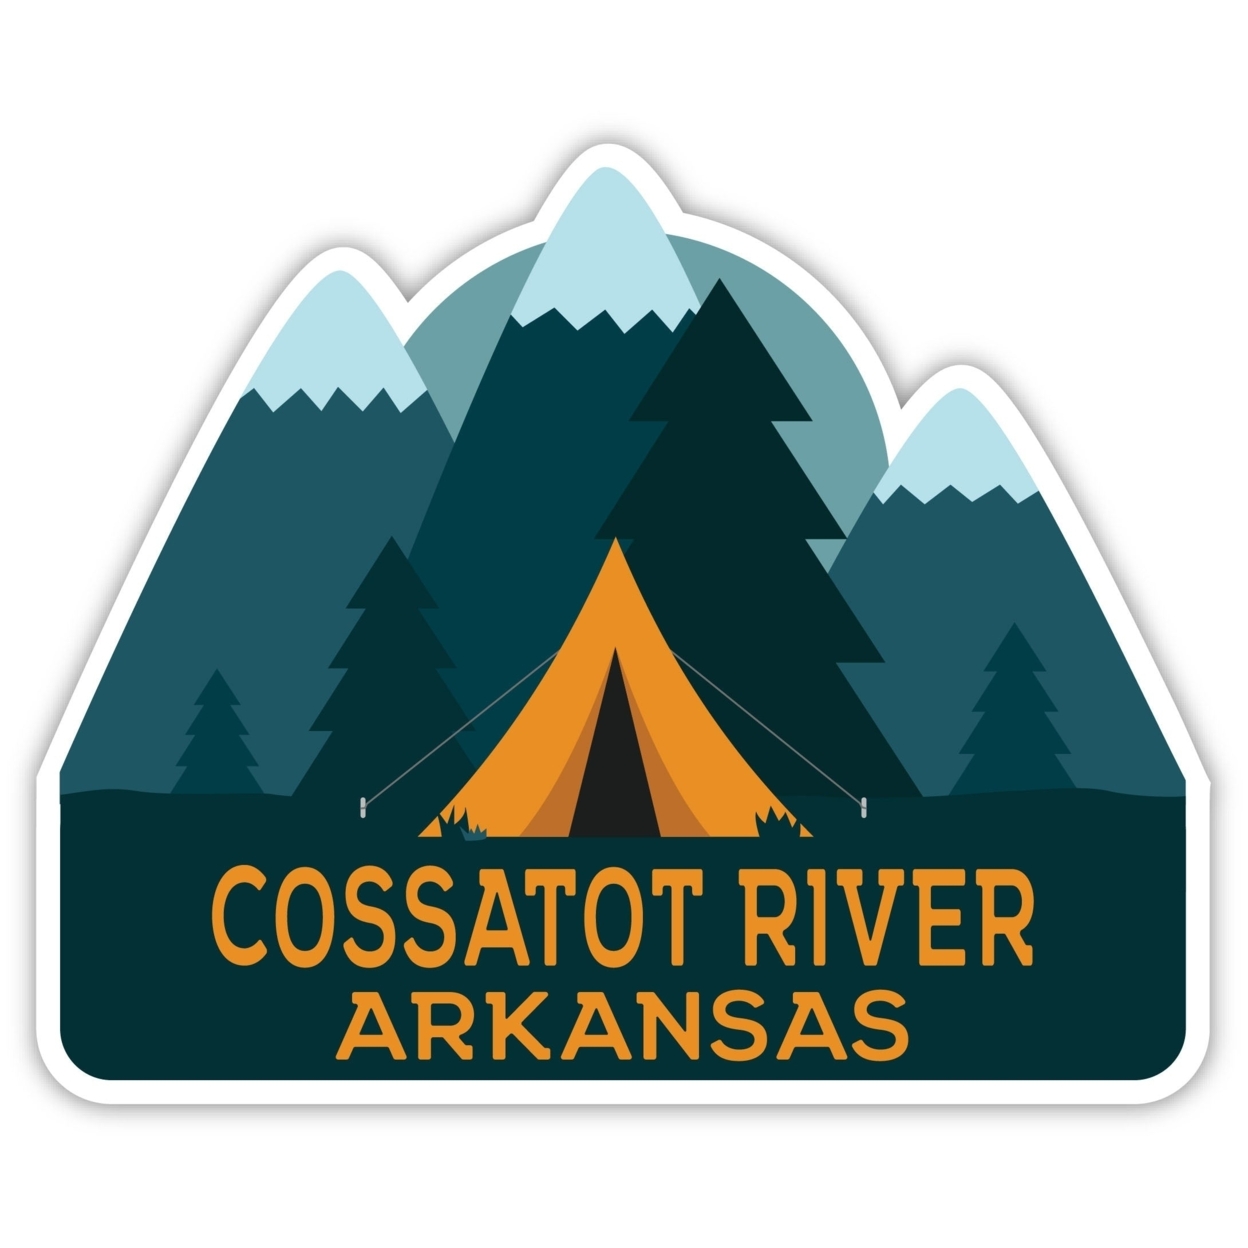 Cossatot River Arkansas Souvenir Decorative Stickers (Choose Theme And Size) - 4-Pack, 10-Inch, Tent